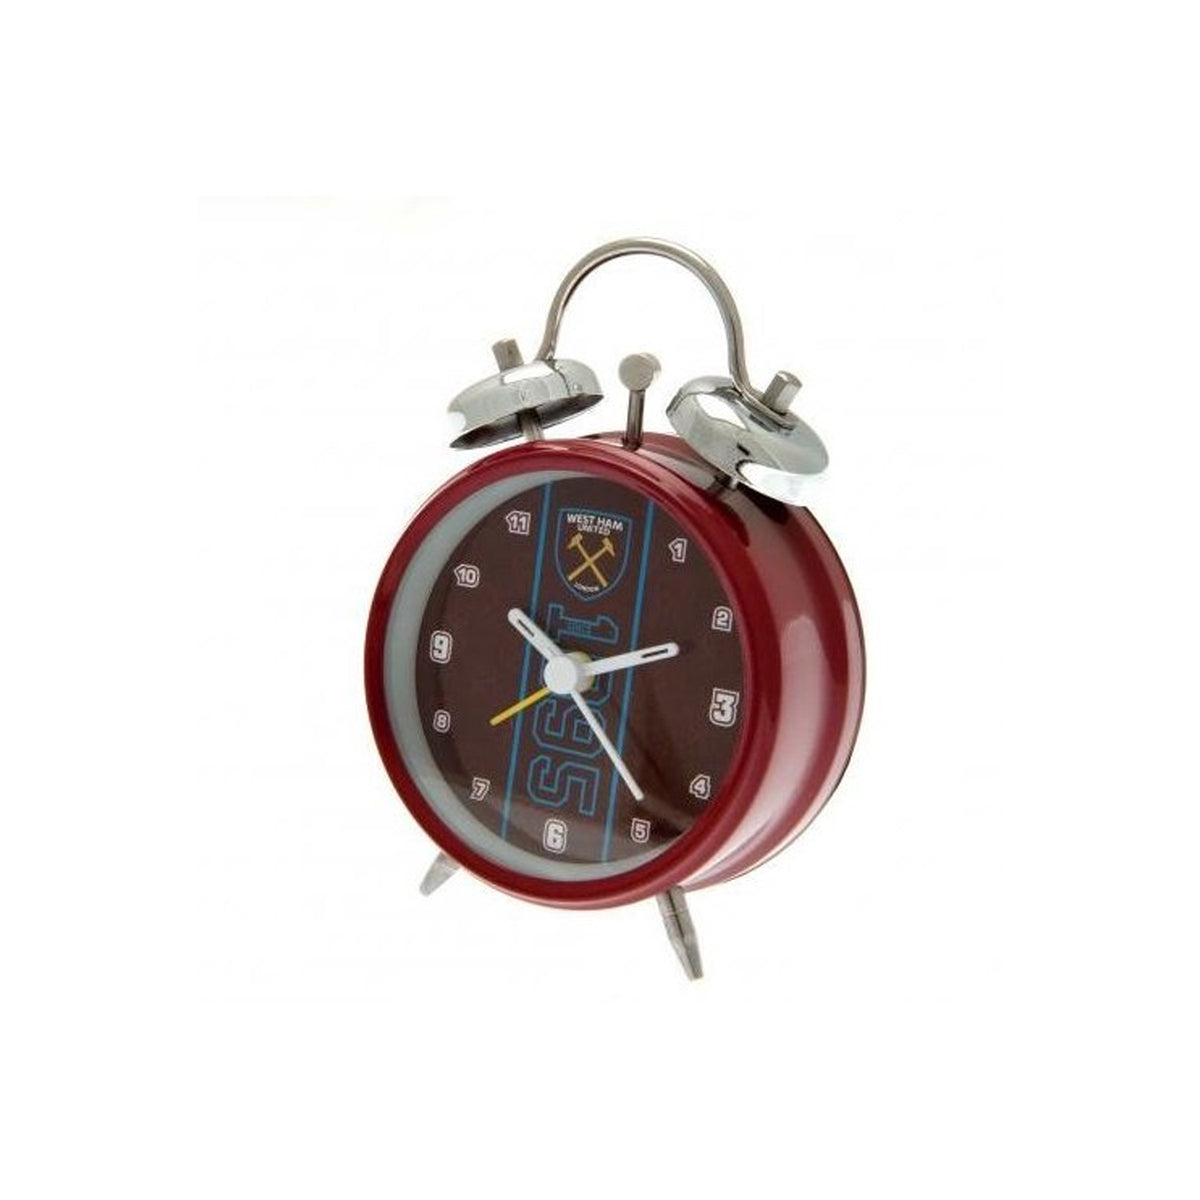 West Ham United FC Since 1895 Alarm Clock